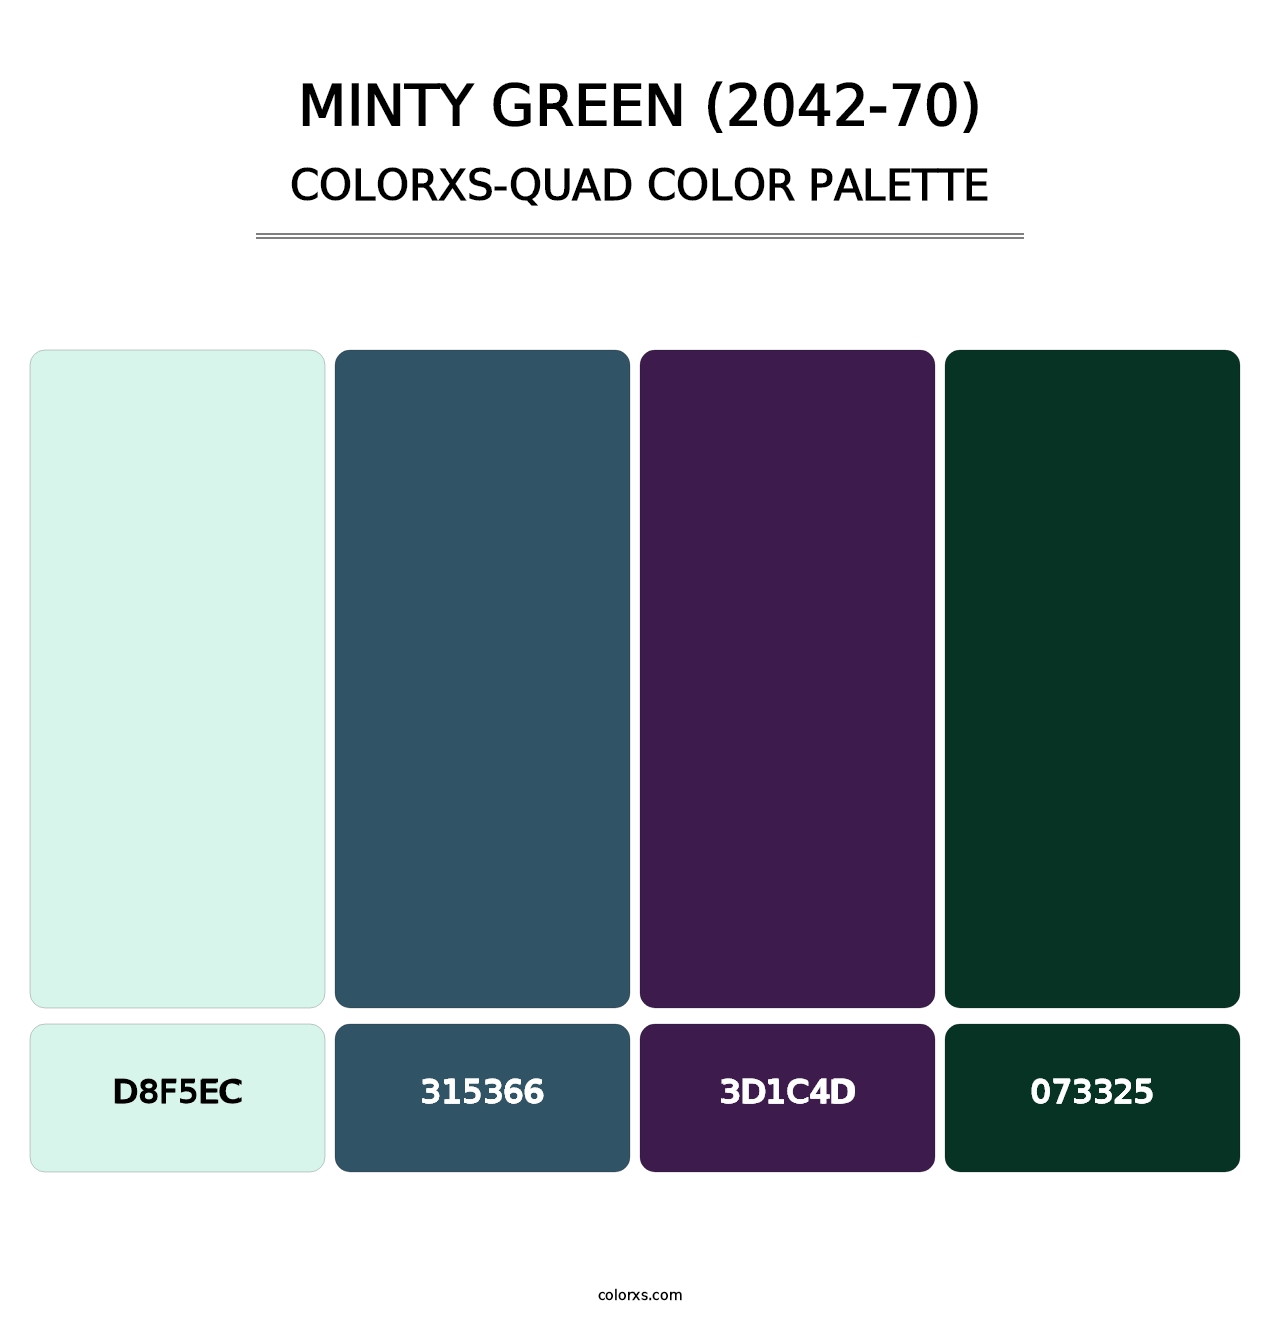 Minty Green (2042-70) - Colorxs Quad Palette